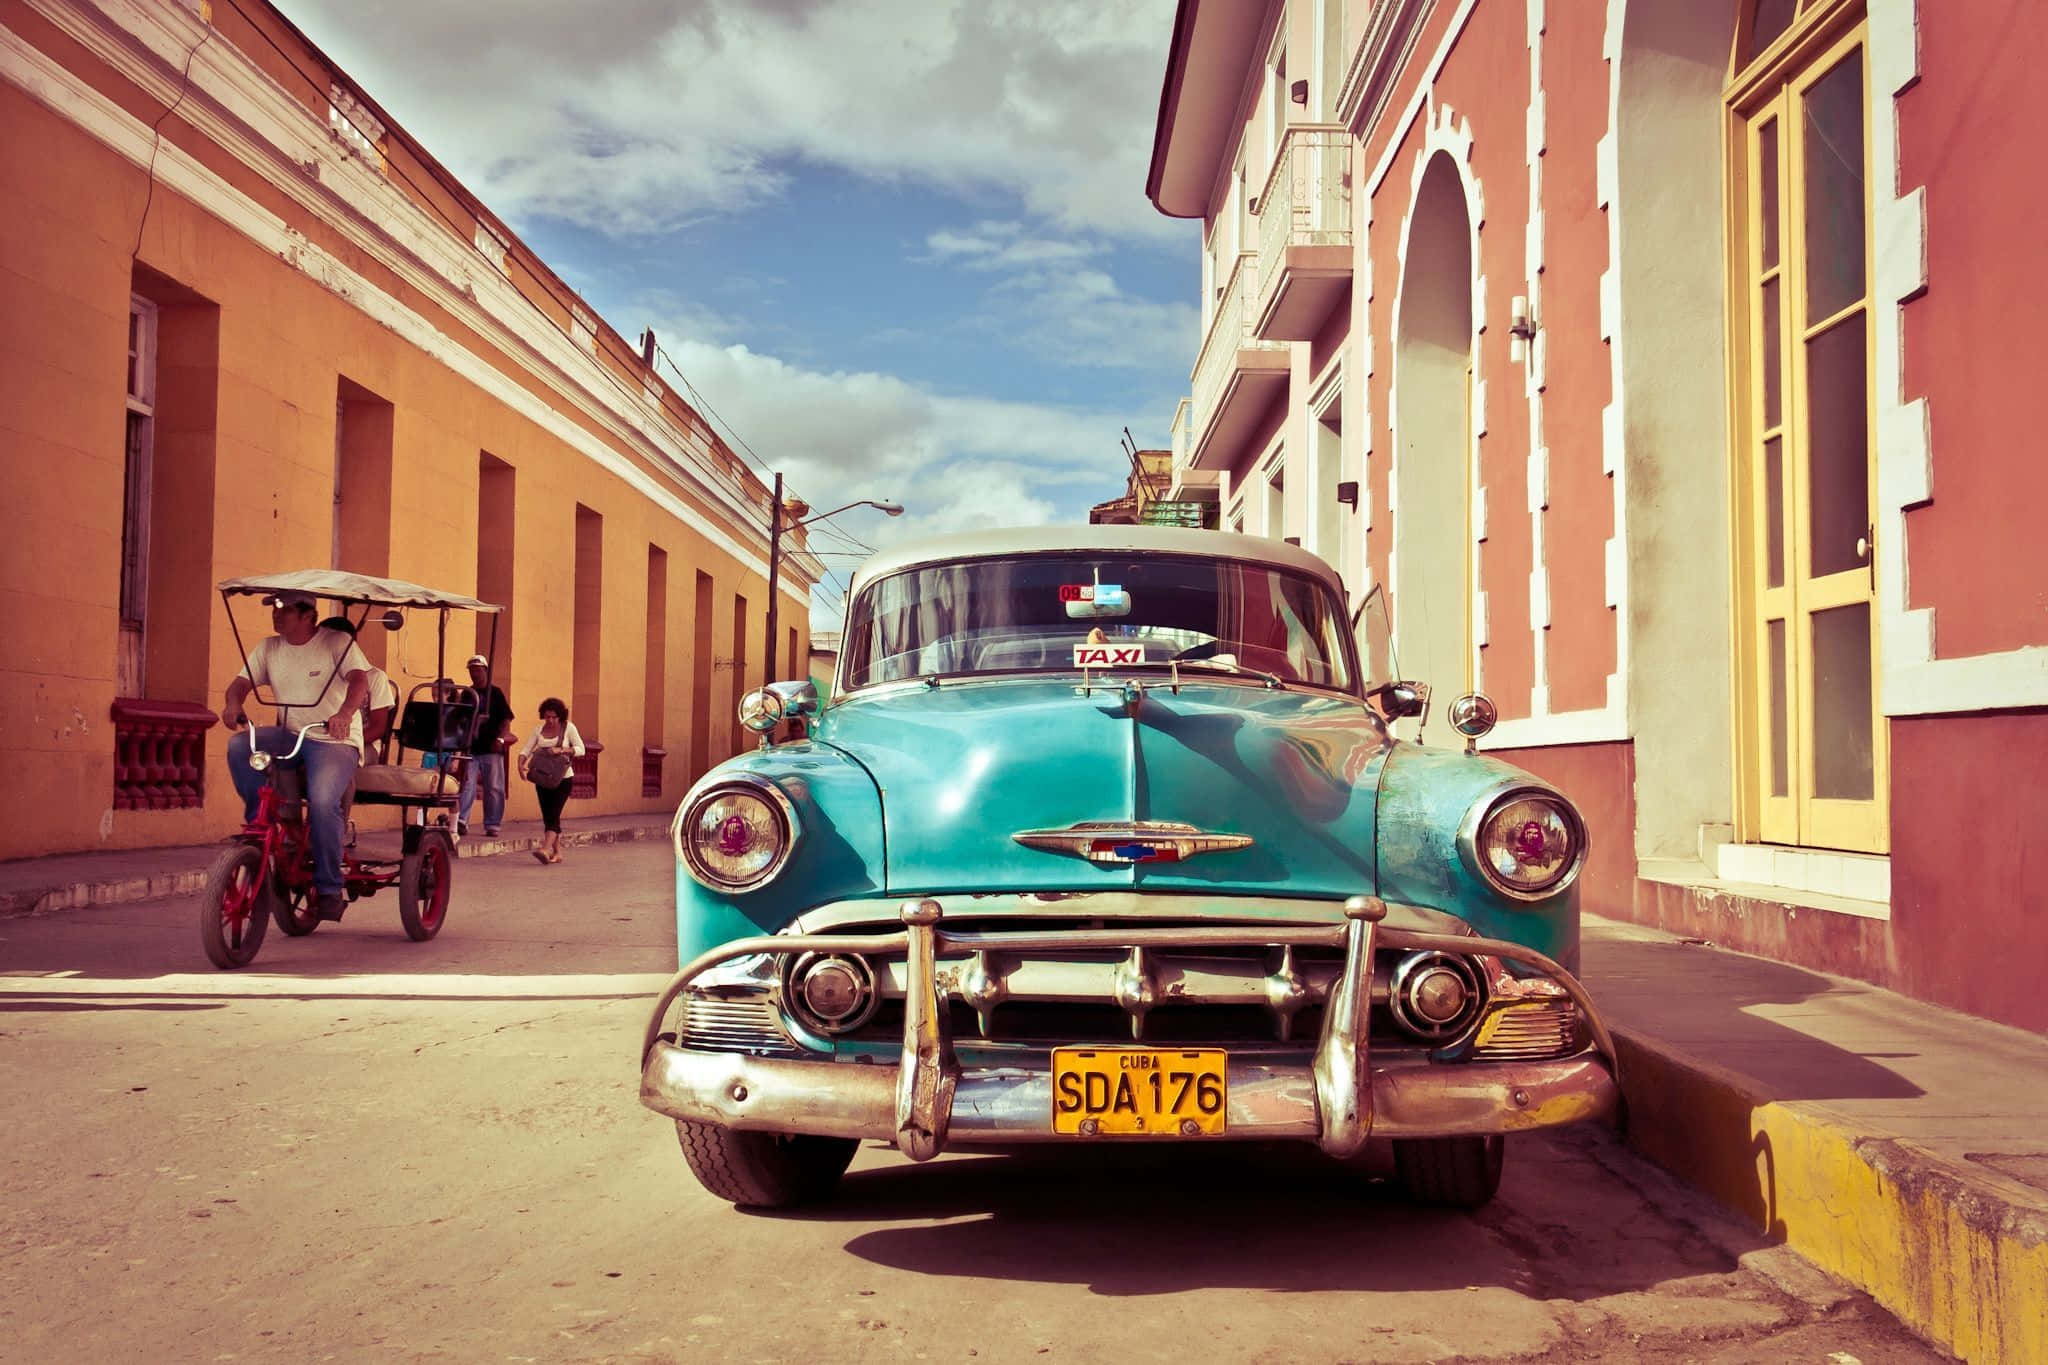 La Habana, Cuba - Stunning Architecture and Culture